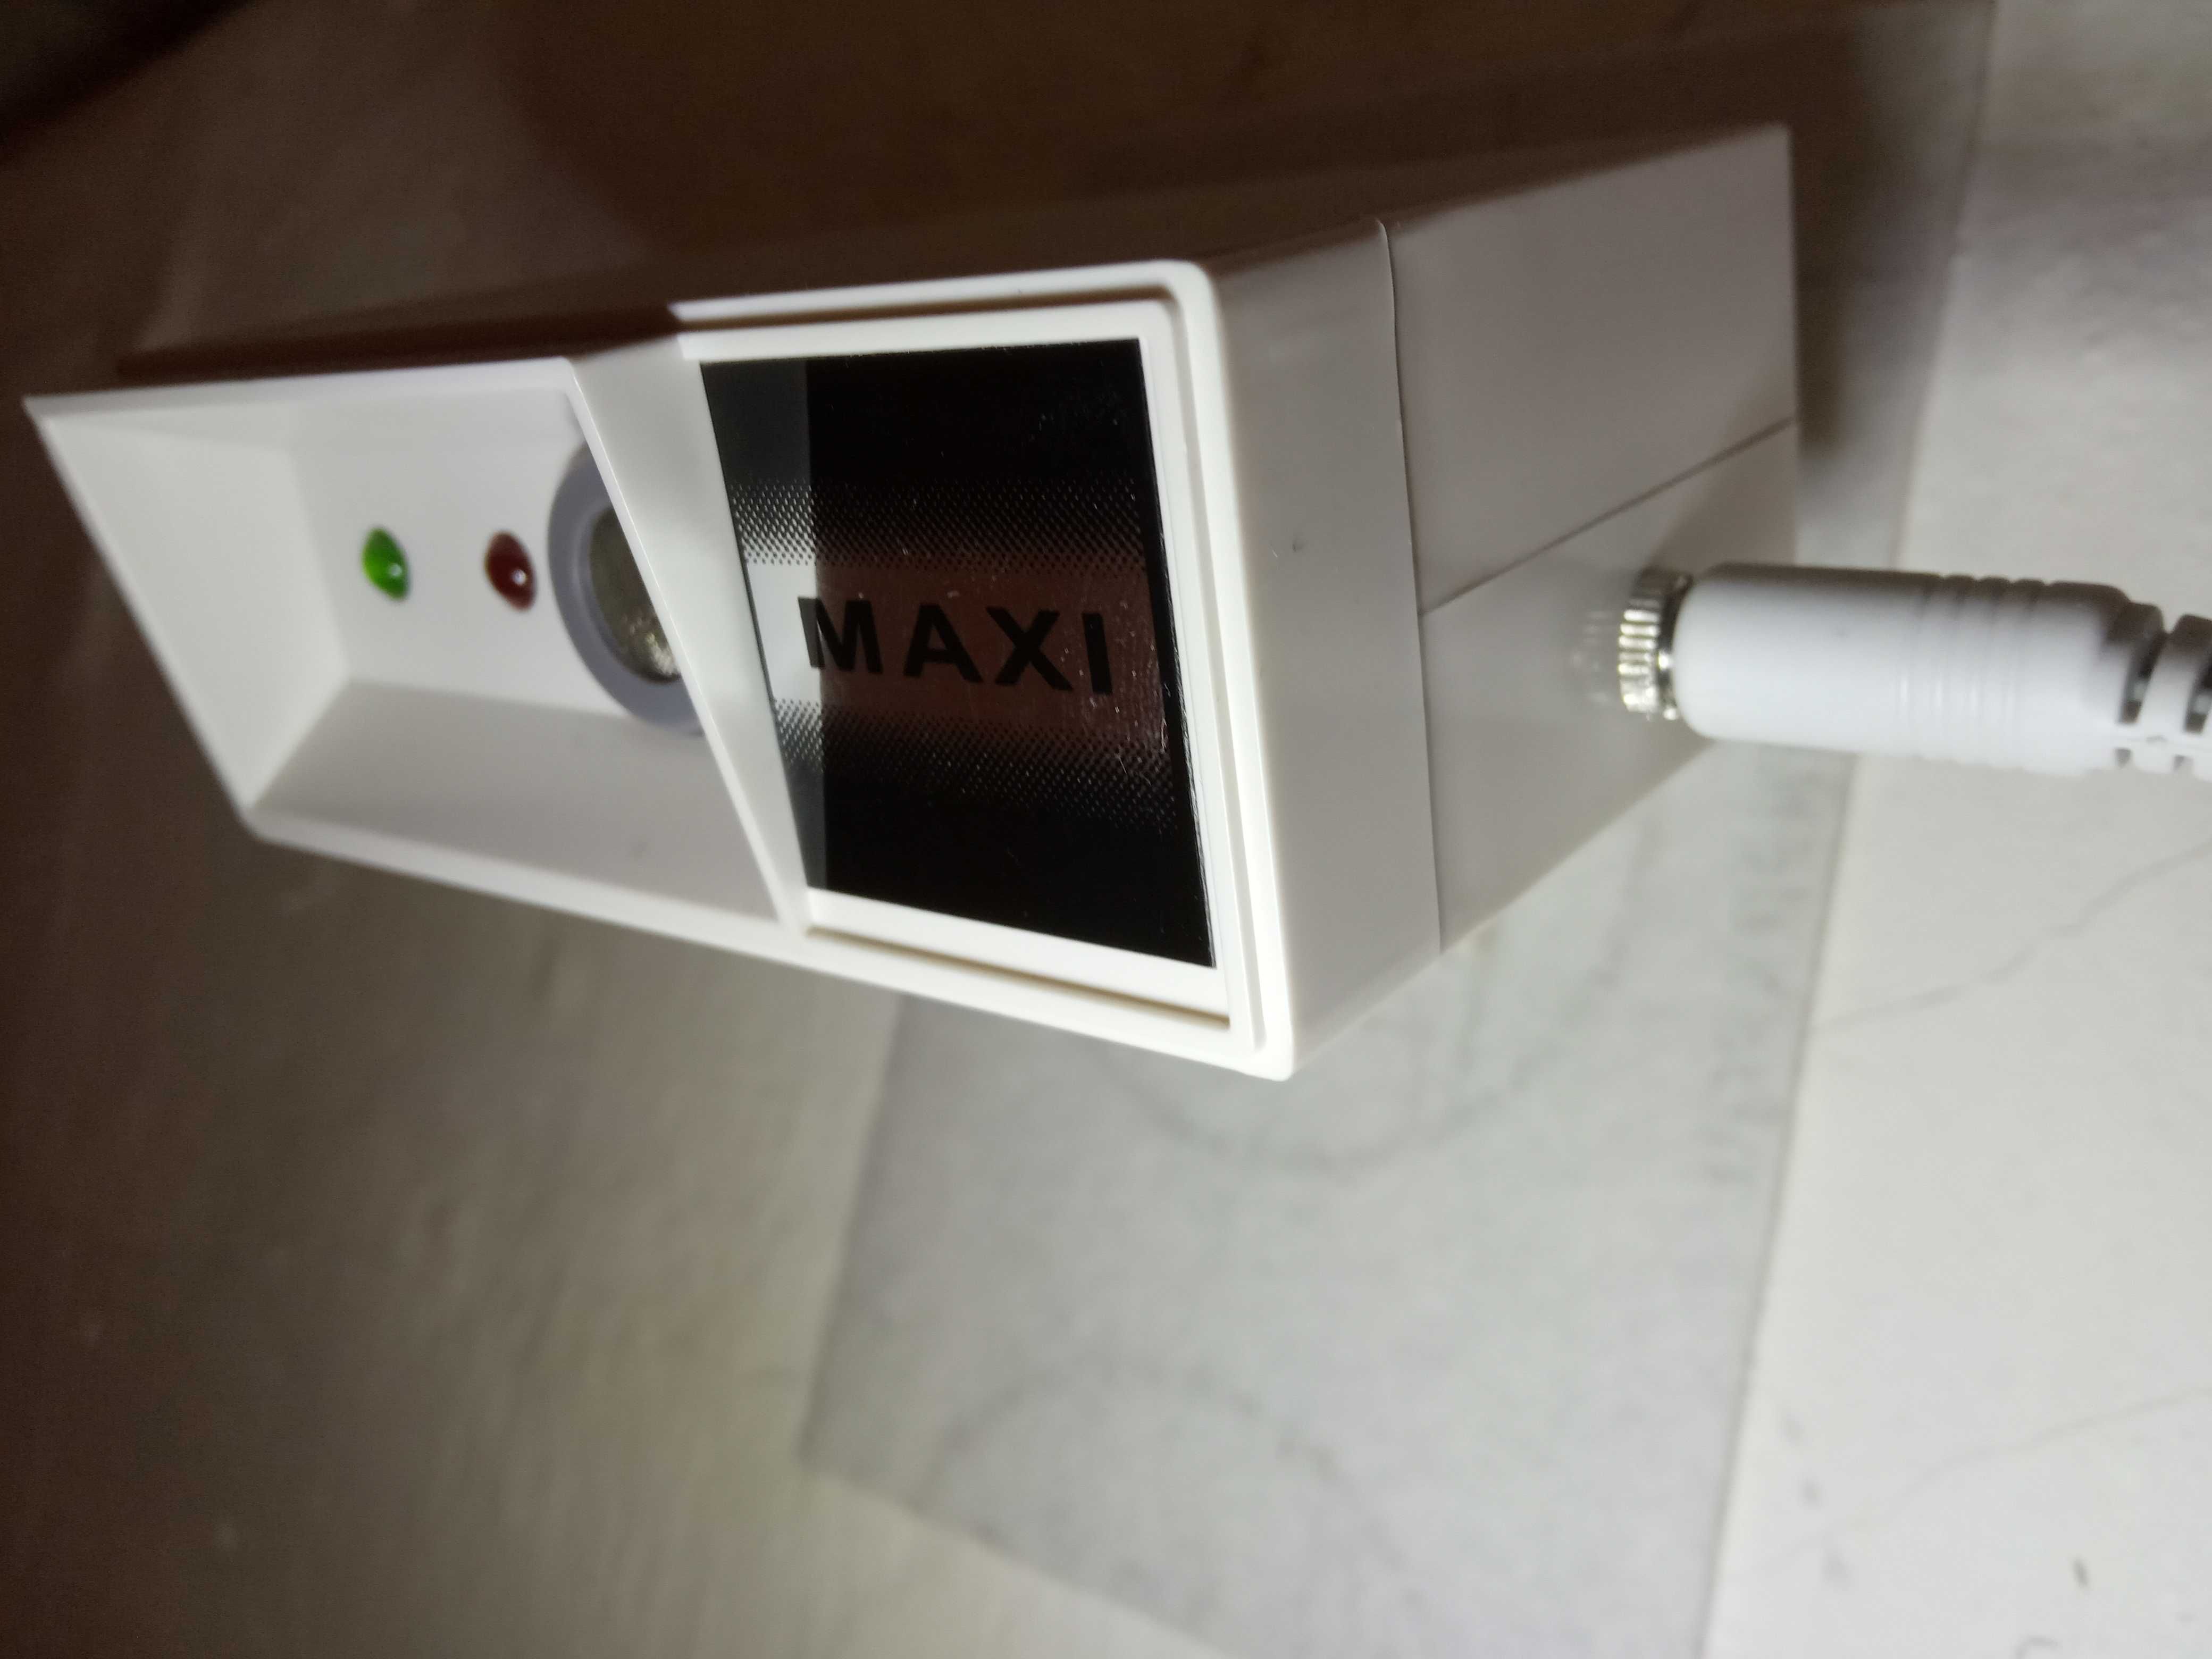 Газосигнализатор пропан бутан метан датчик детектор утечки газа MAXI C